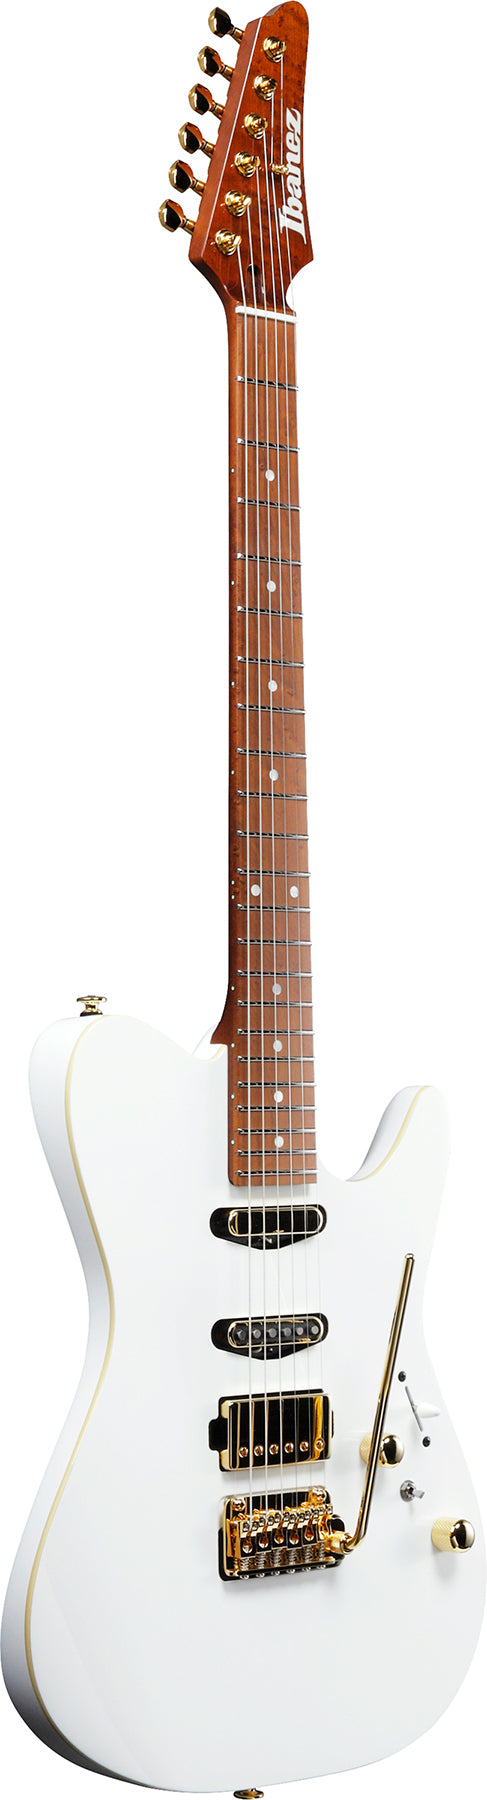 Ibanez lb1wh Lari Basilio Signature Guitare électrique (blanc)